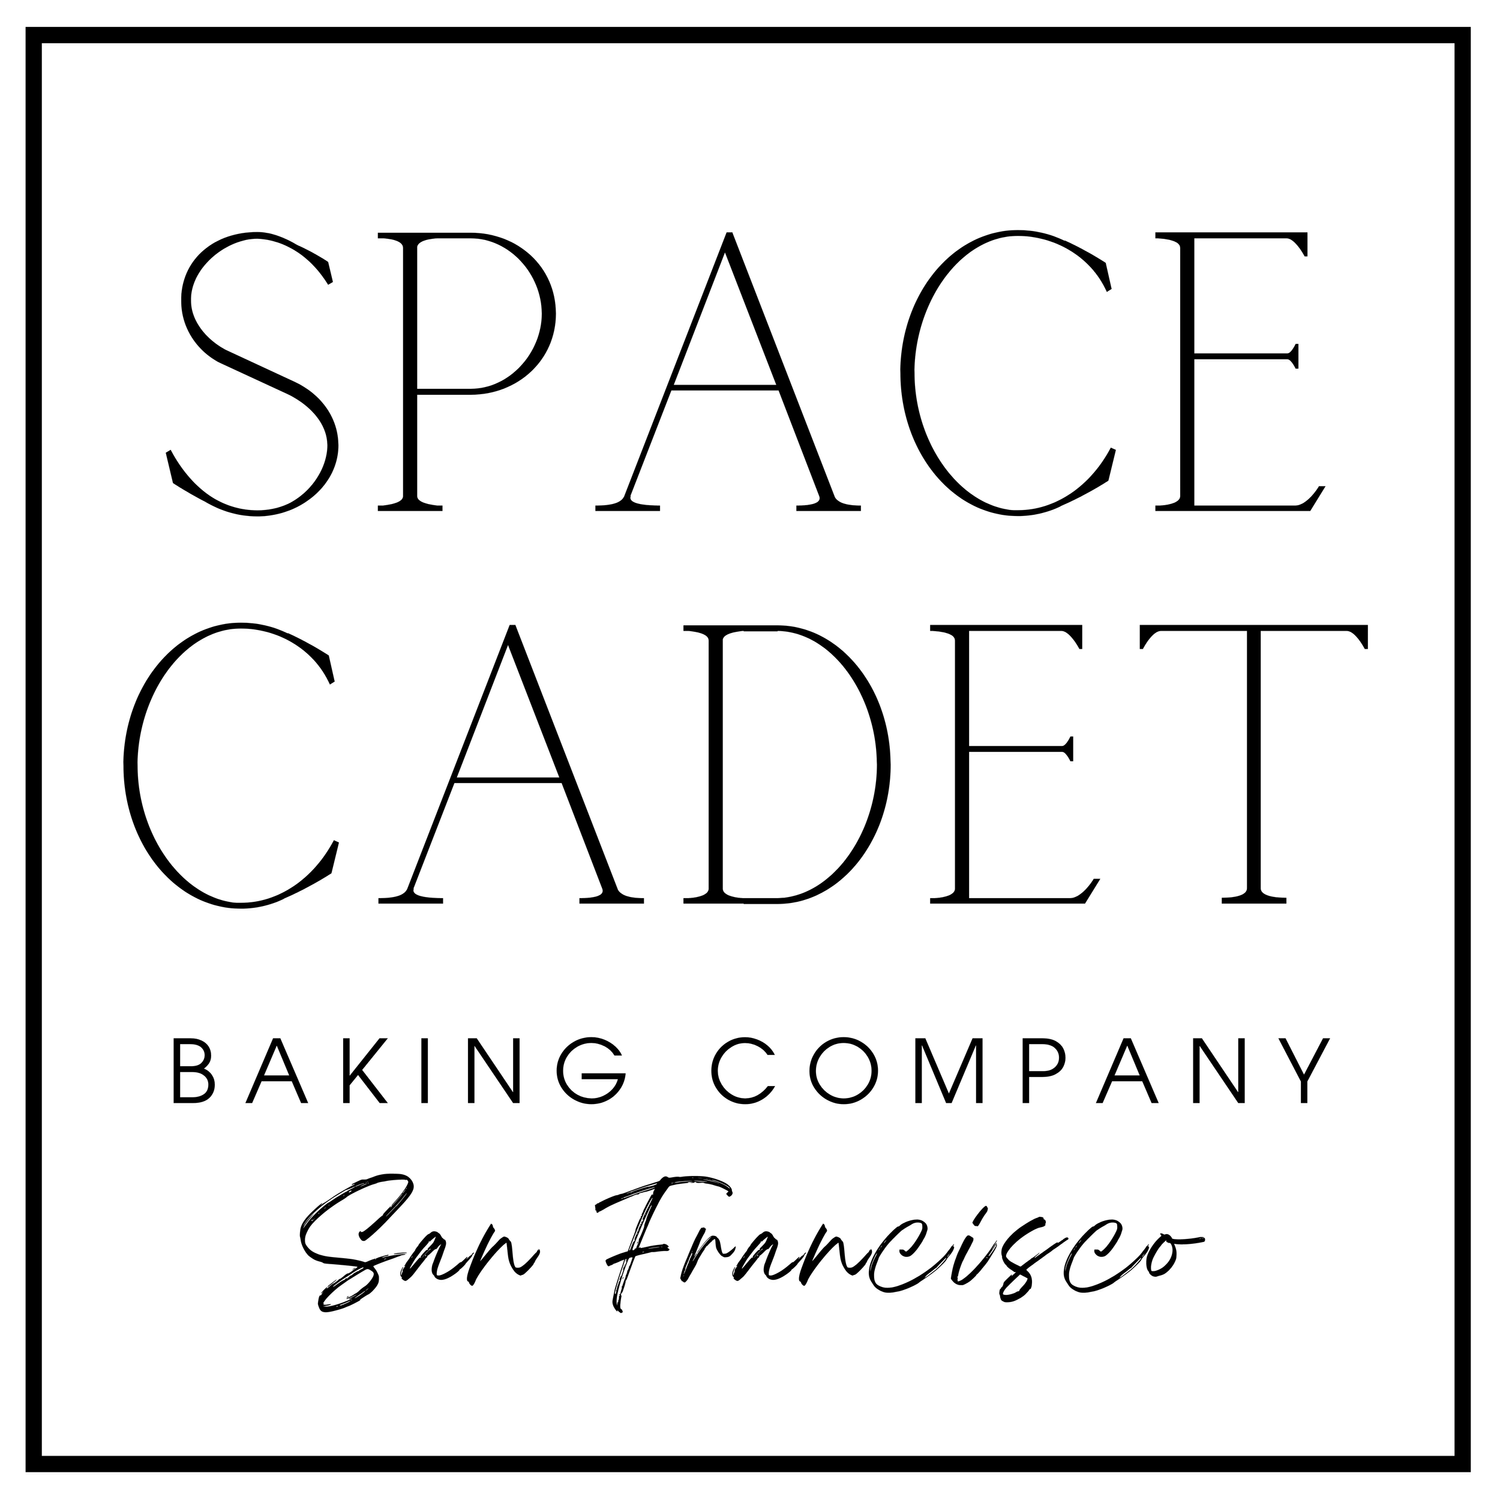 Space Cadet Baking Company - San Francisco